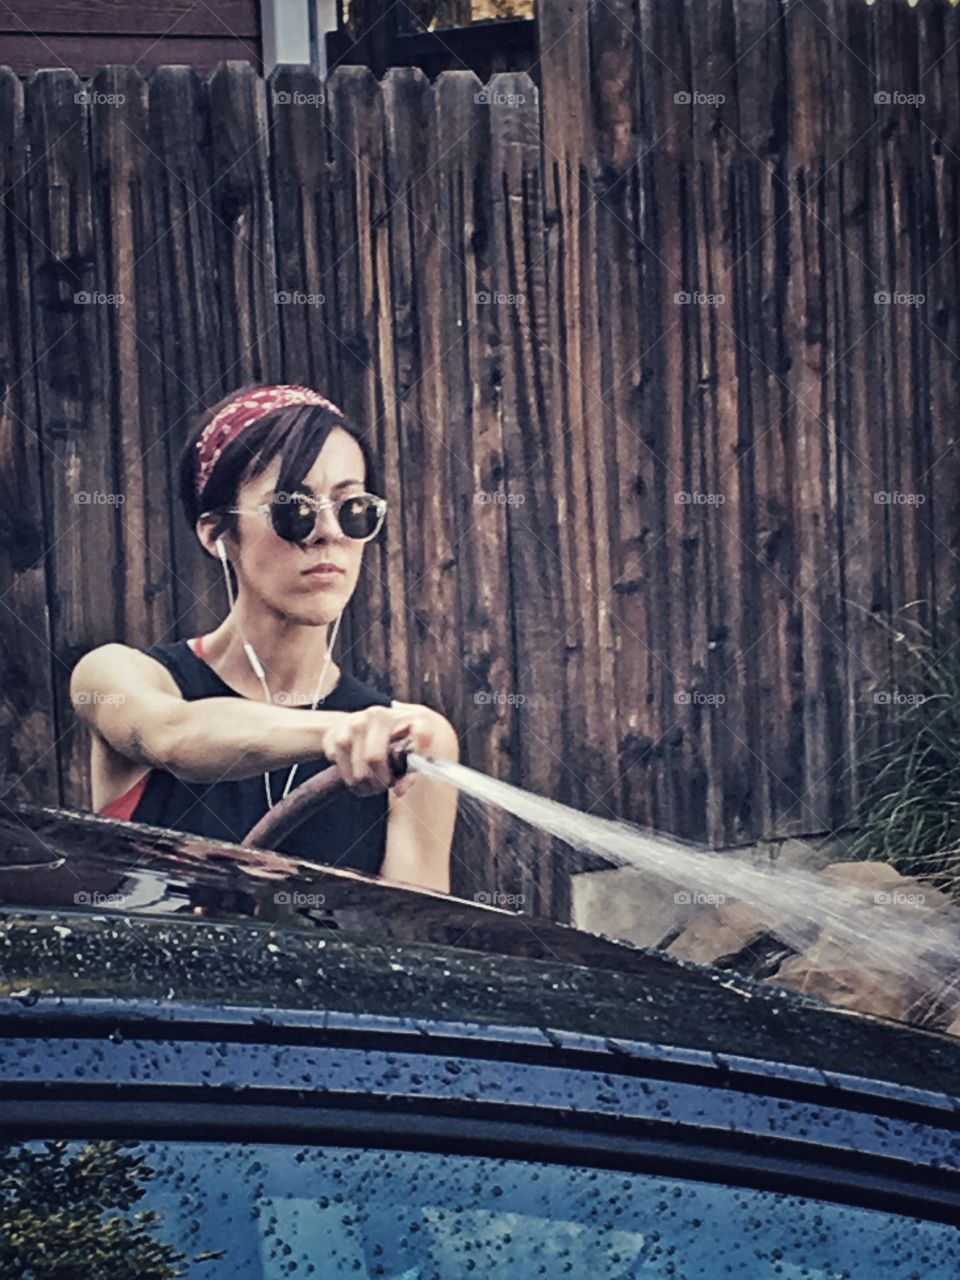 Woman washing car